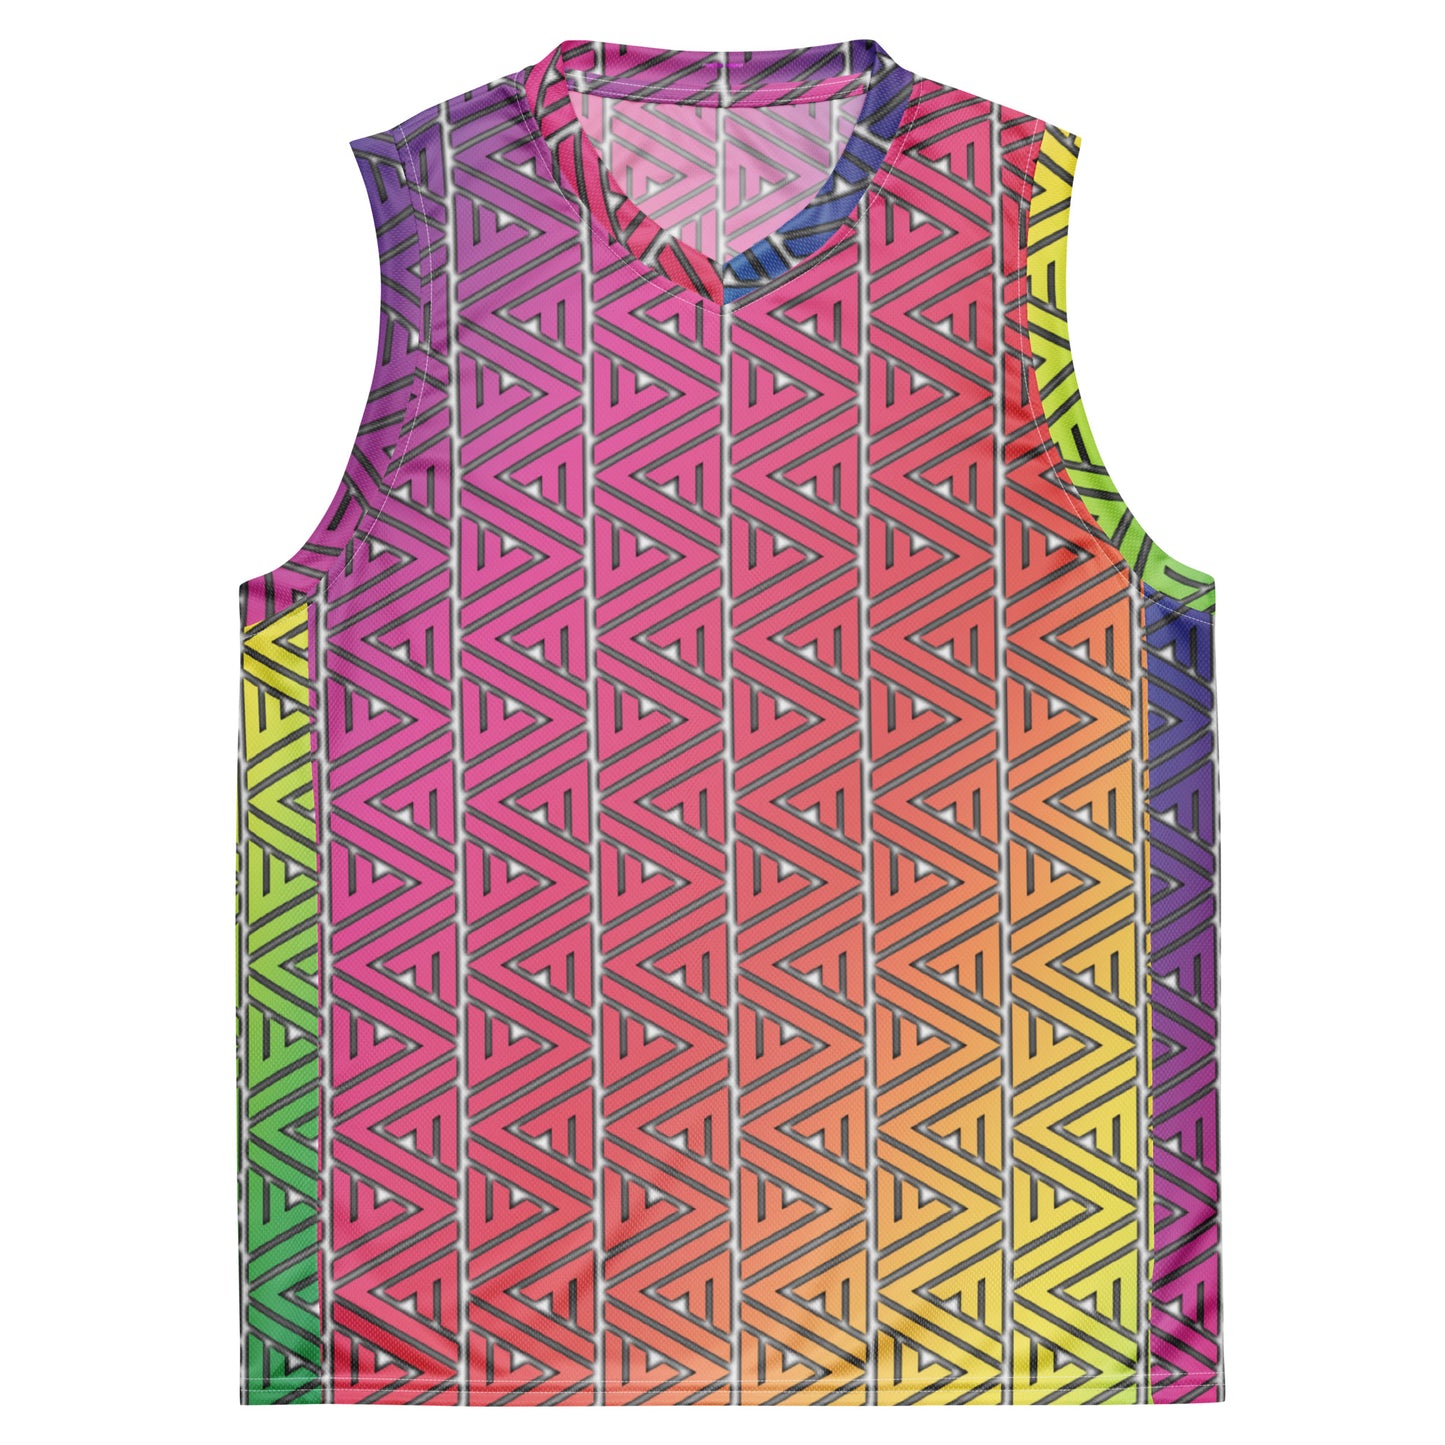 FV Recycled Rainbow unisex basketball jersey